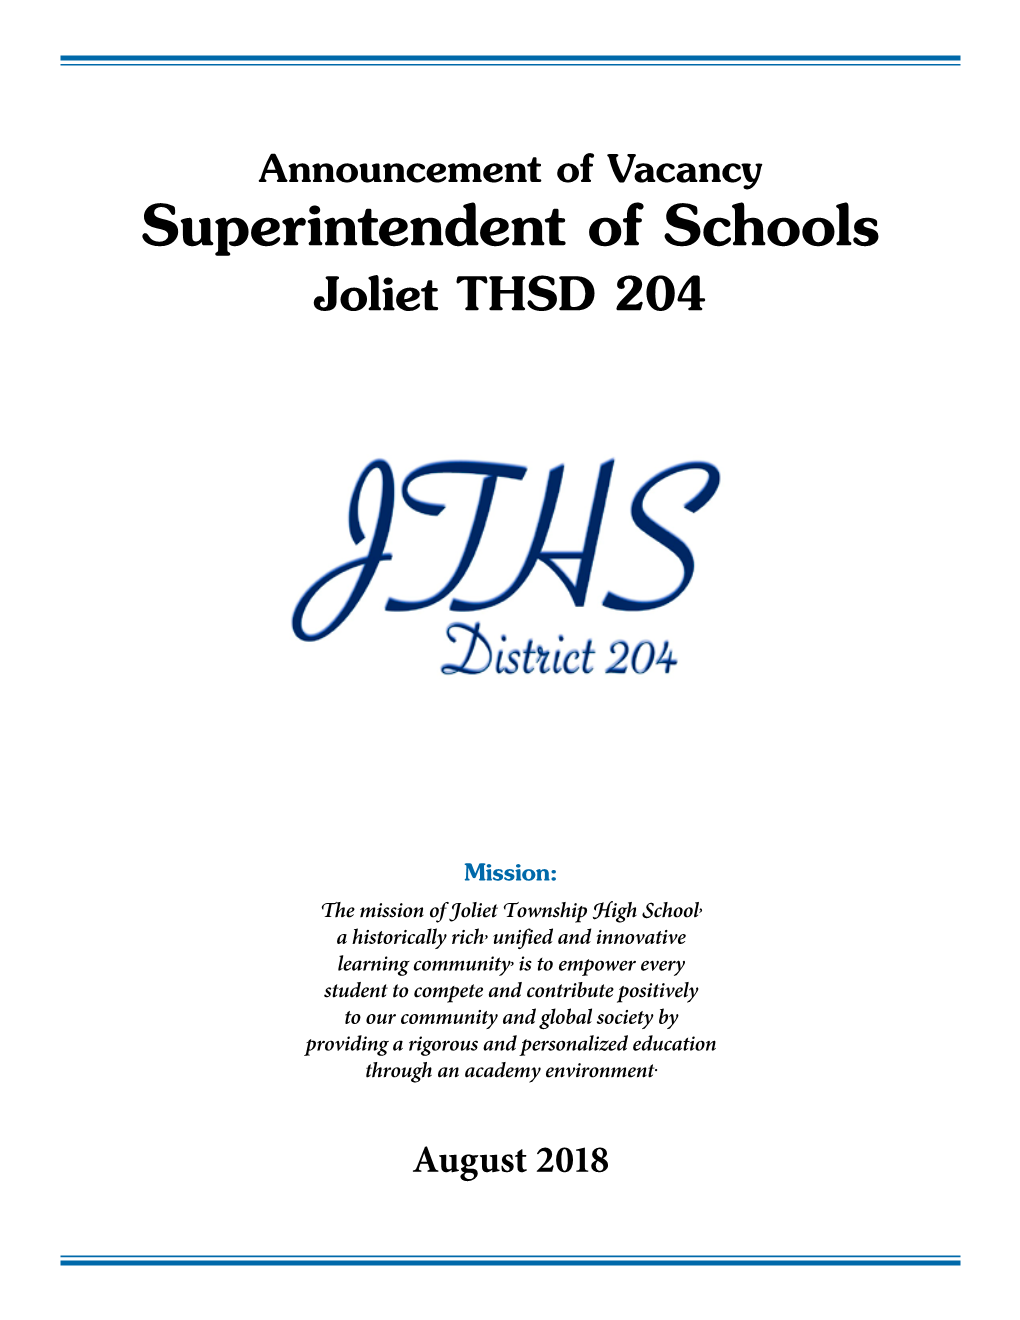 Superintendent of Schools Joliet THSD 204